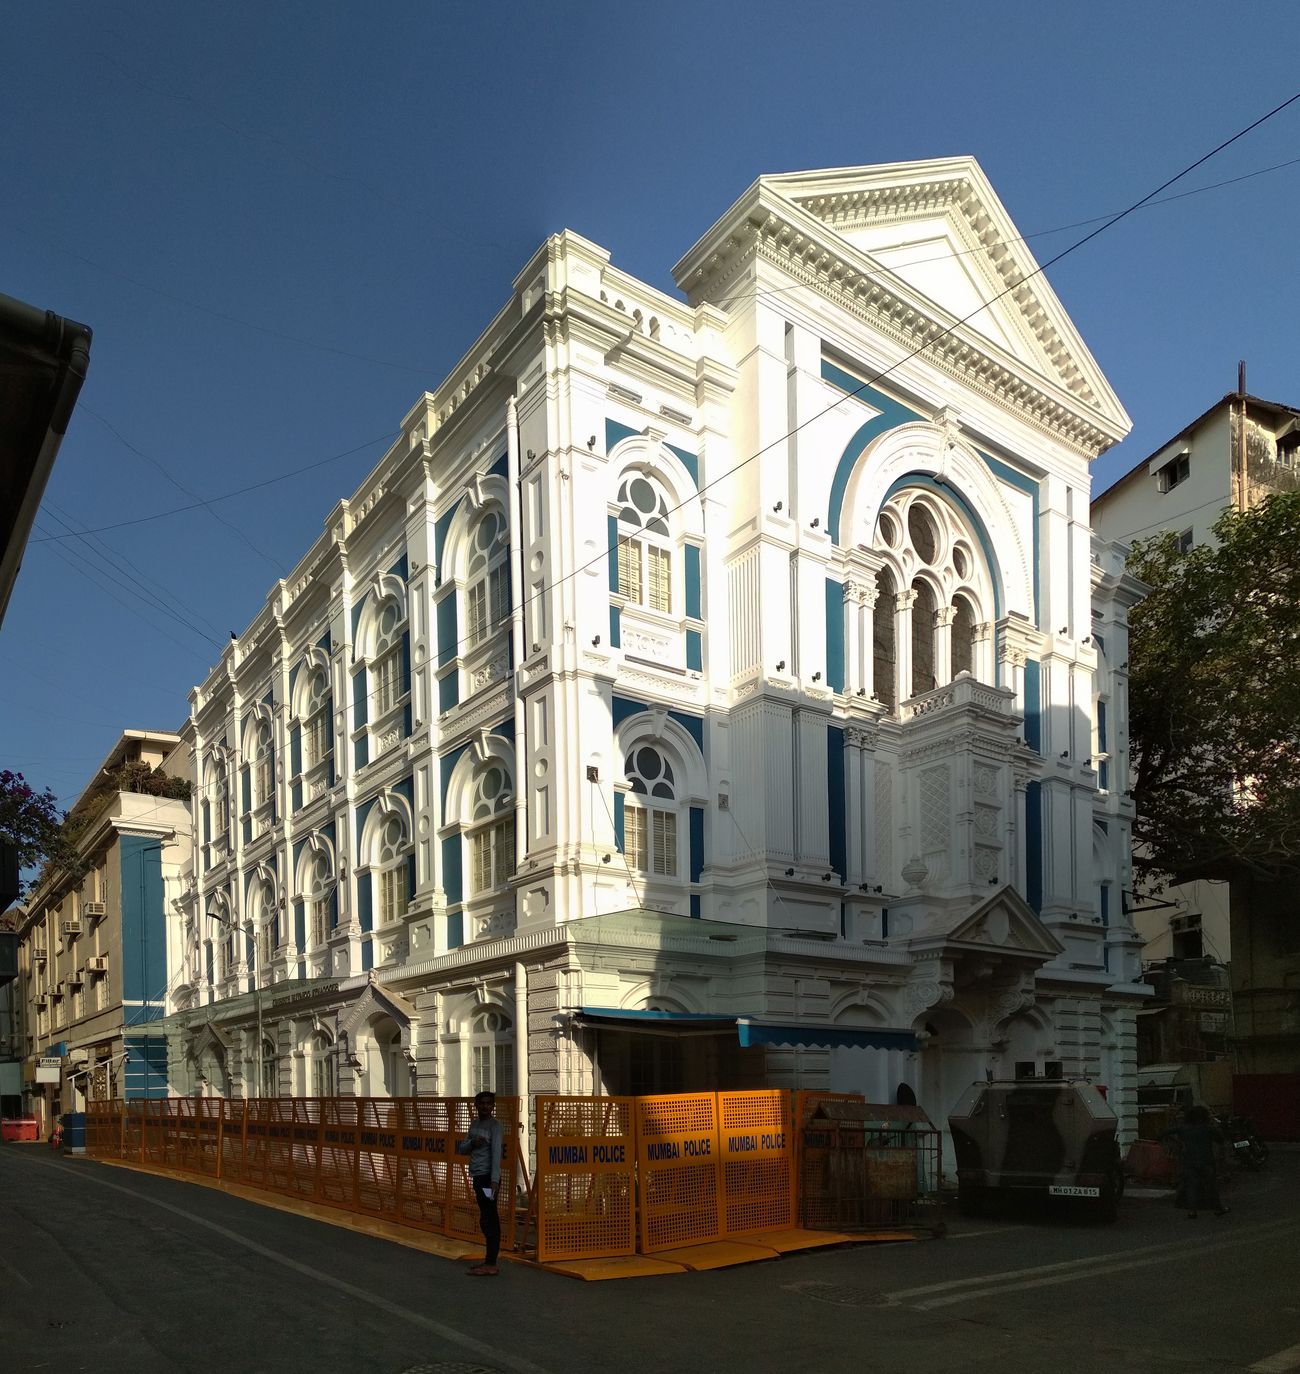 Die Keneseth Elijah Synagoge ist die zweitälteste sephardische Synagoge in Mumbai